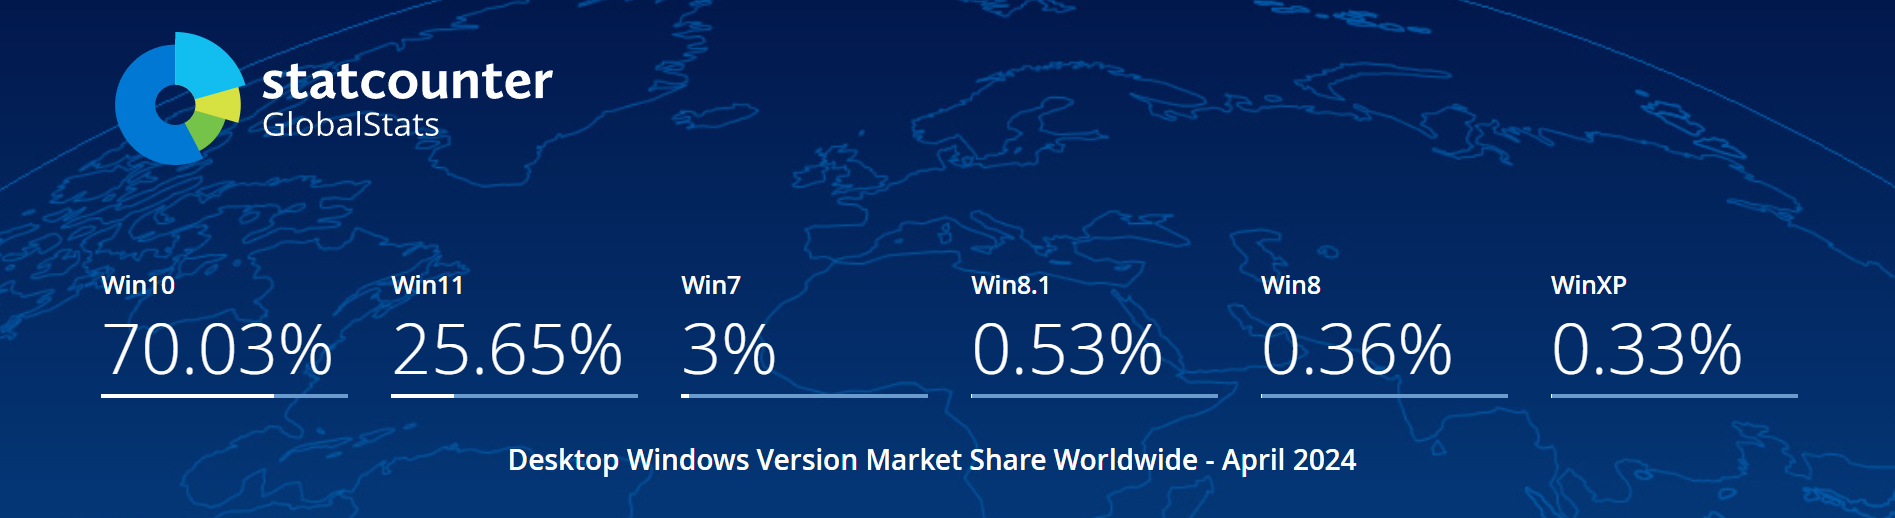 Statcounter-Windows-versions-market-share.jpg